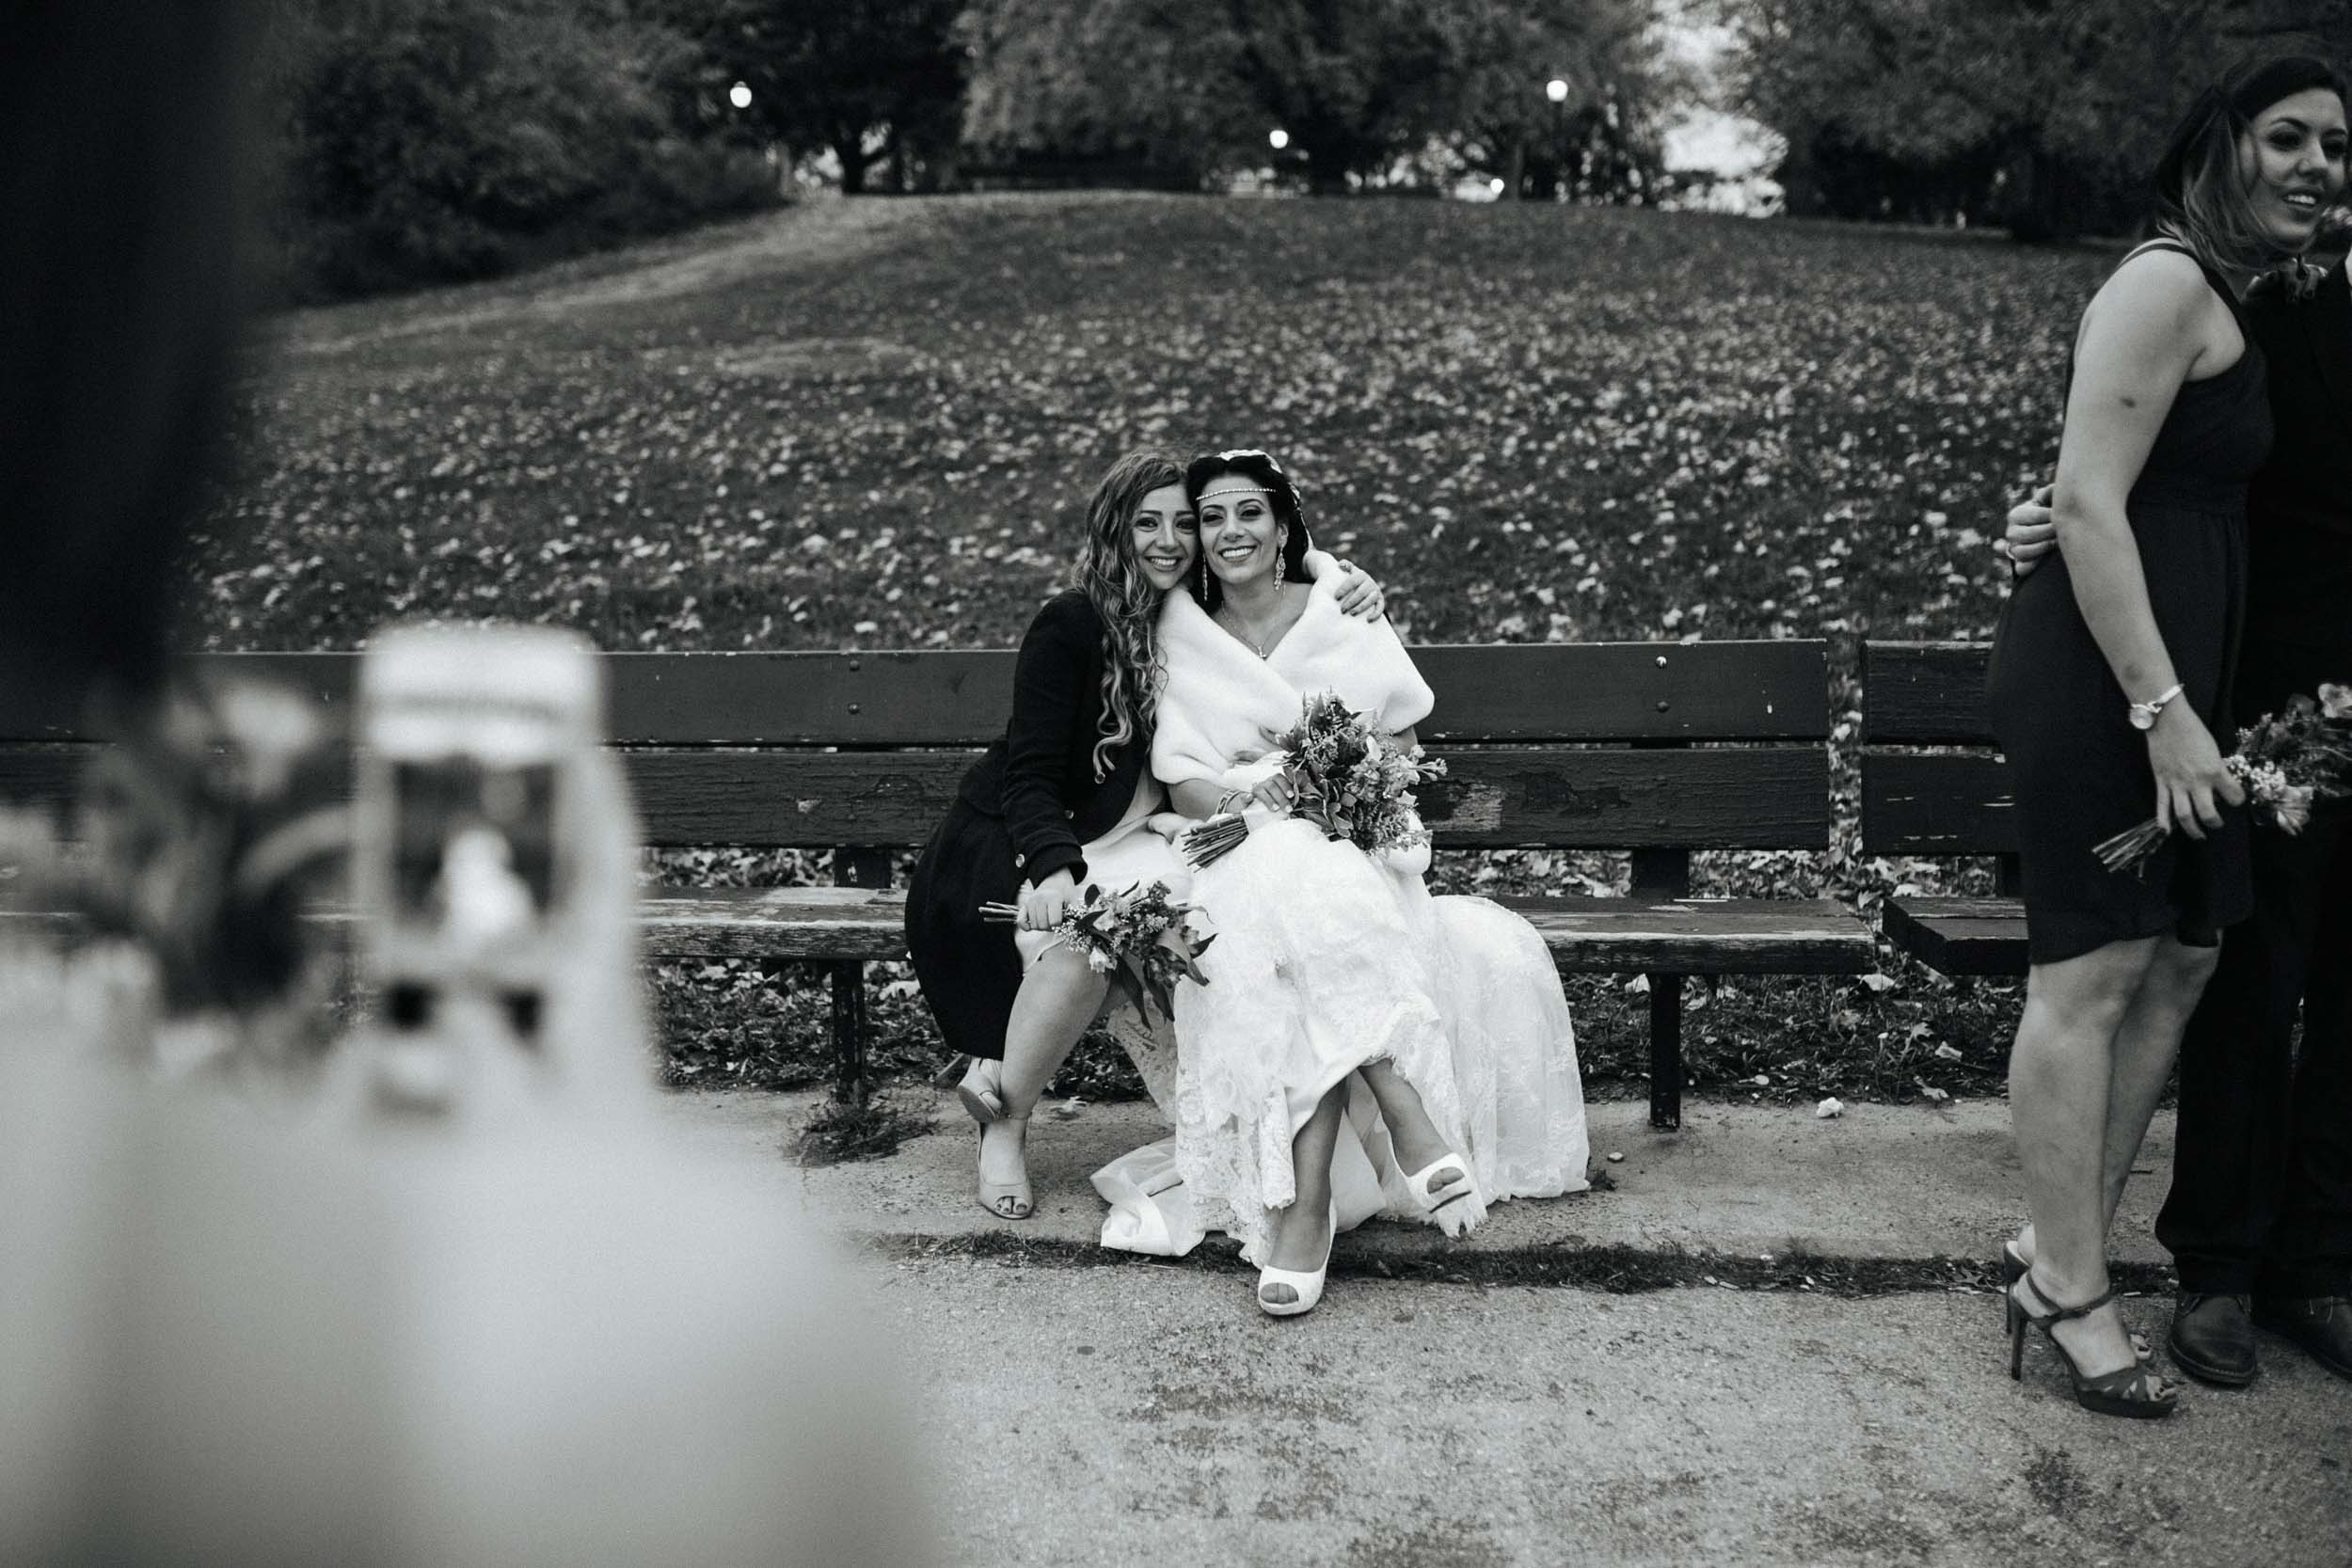  Sarah Kuszelewicz Photography New York City International Elopement Lifestyle Wedding Photographer nyc city hall elopement 